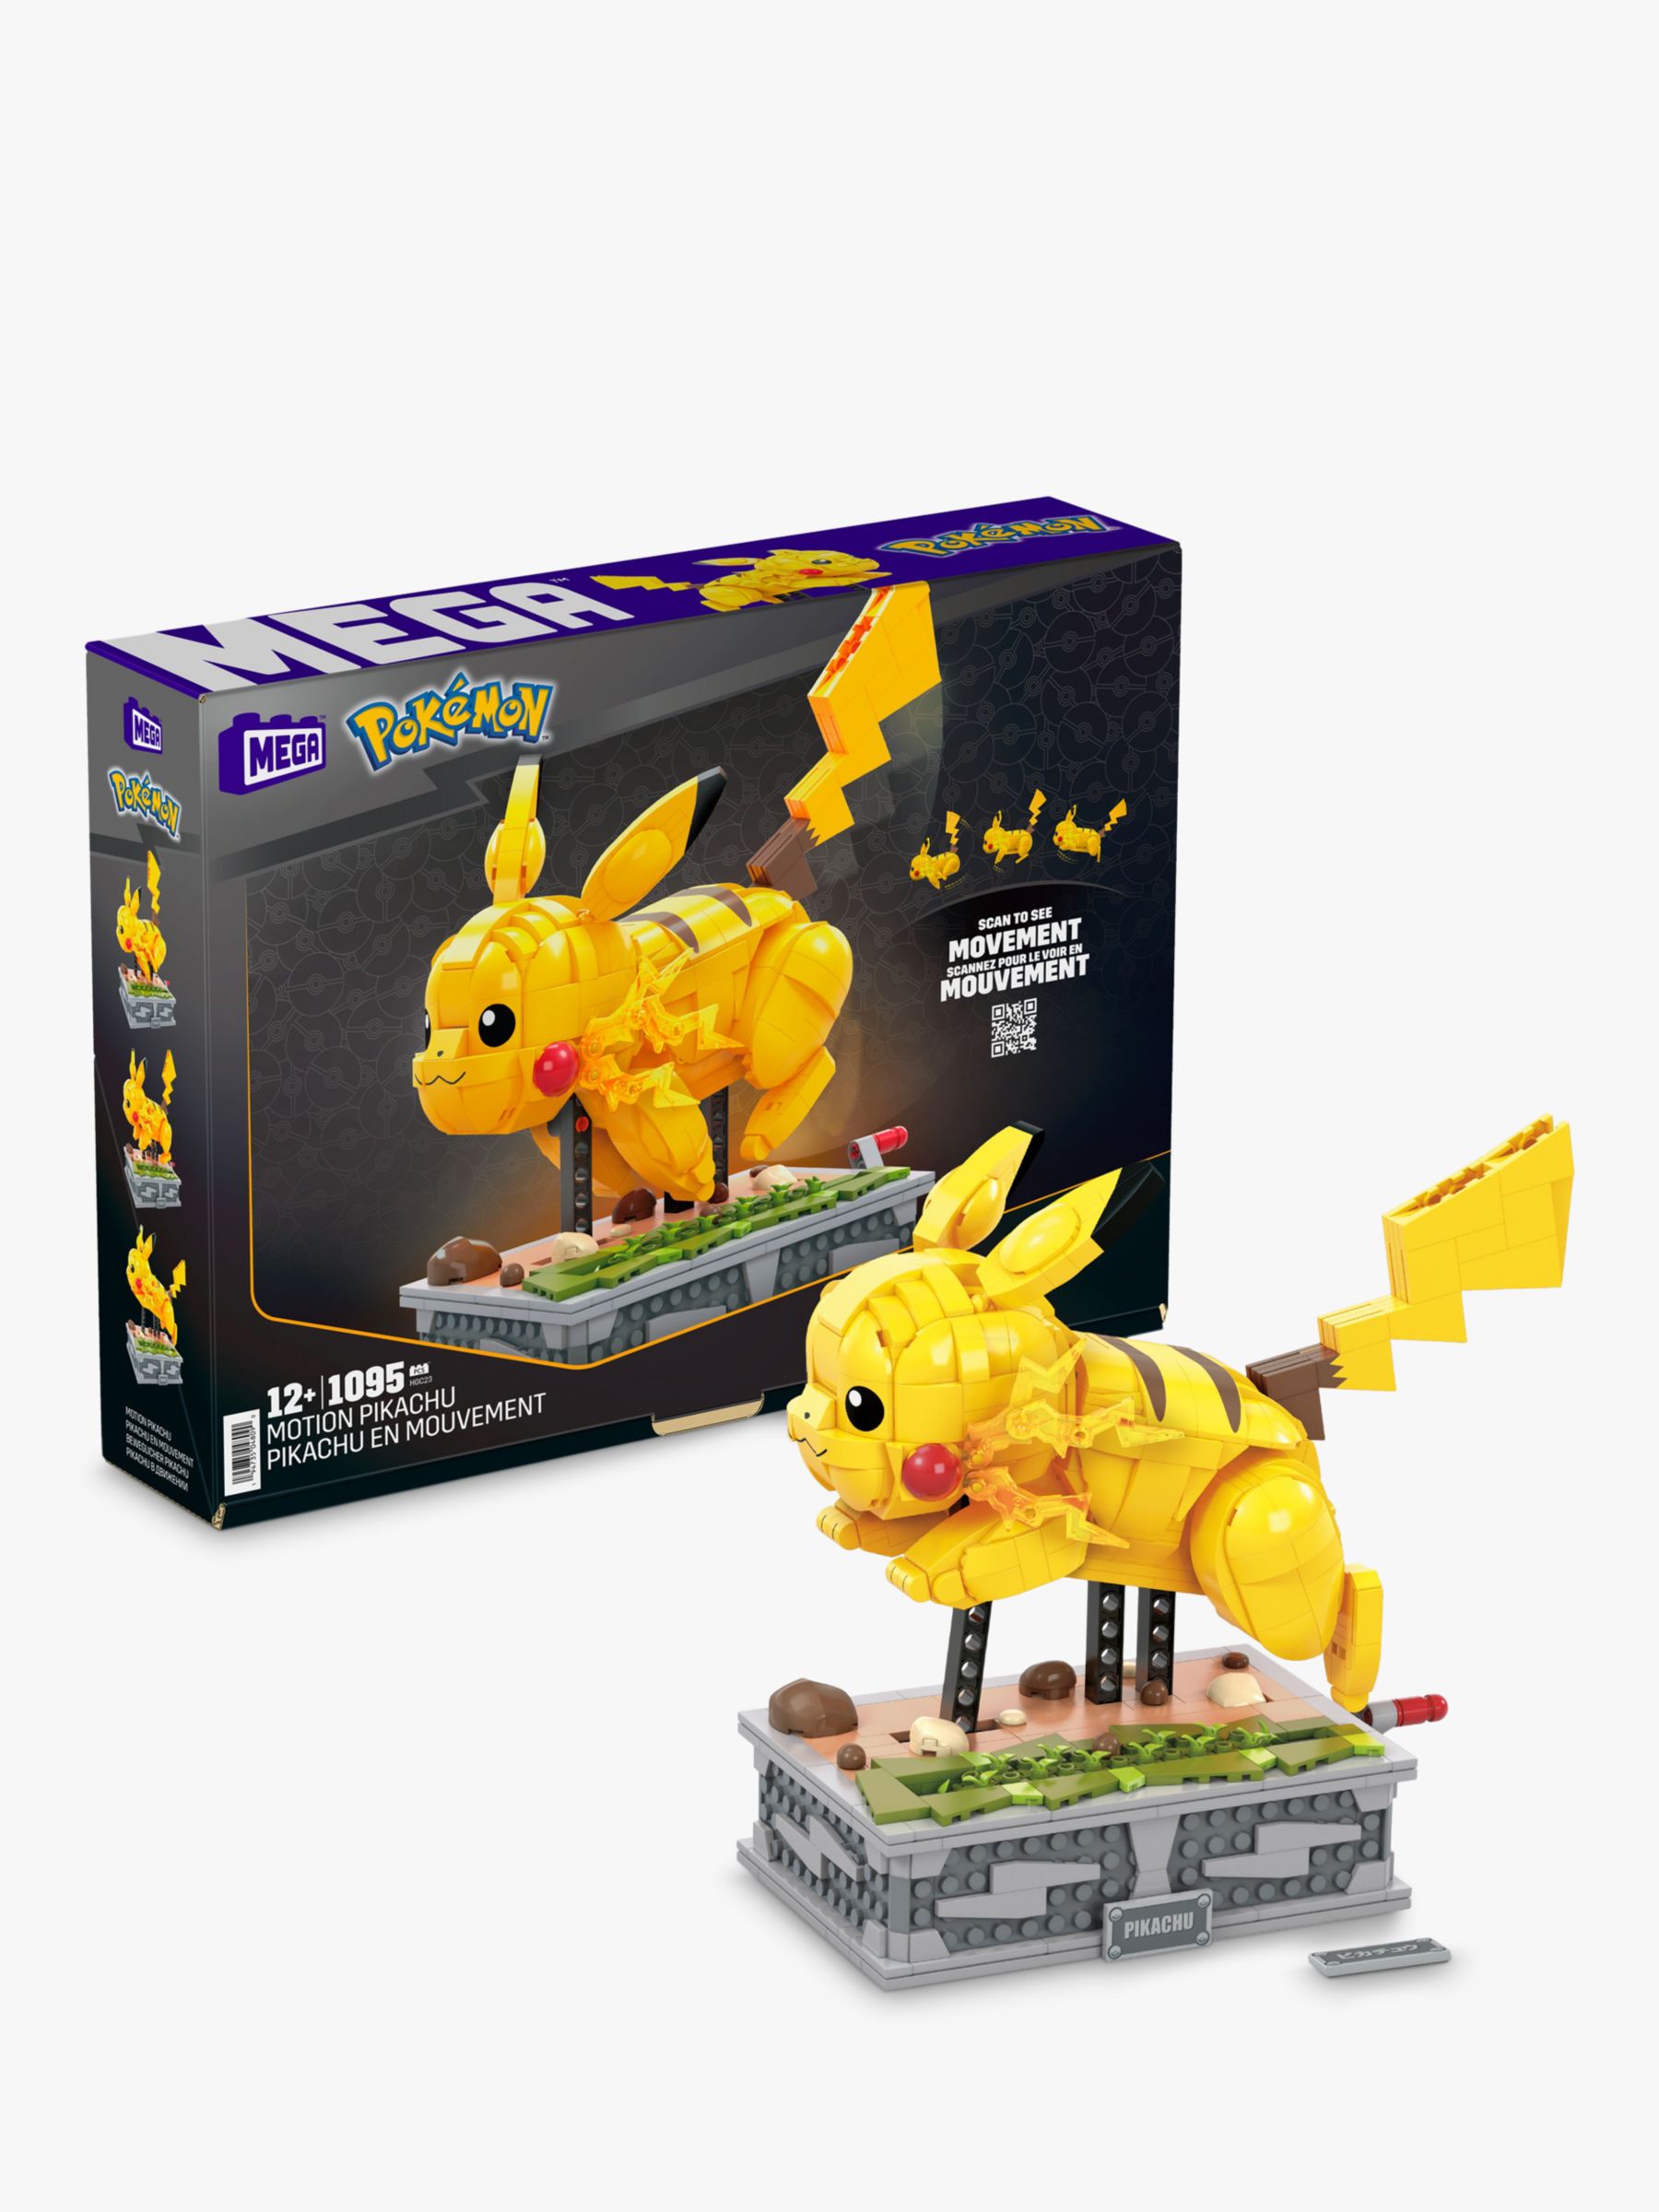 Pikachu Lingerie -  UK